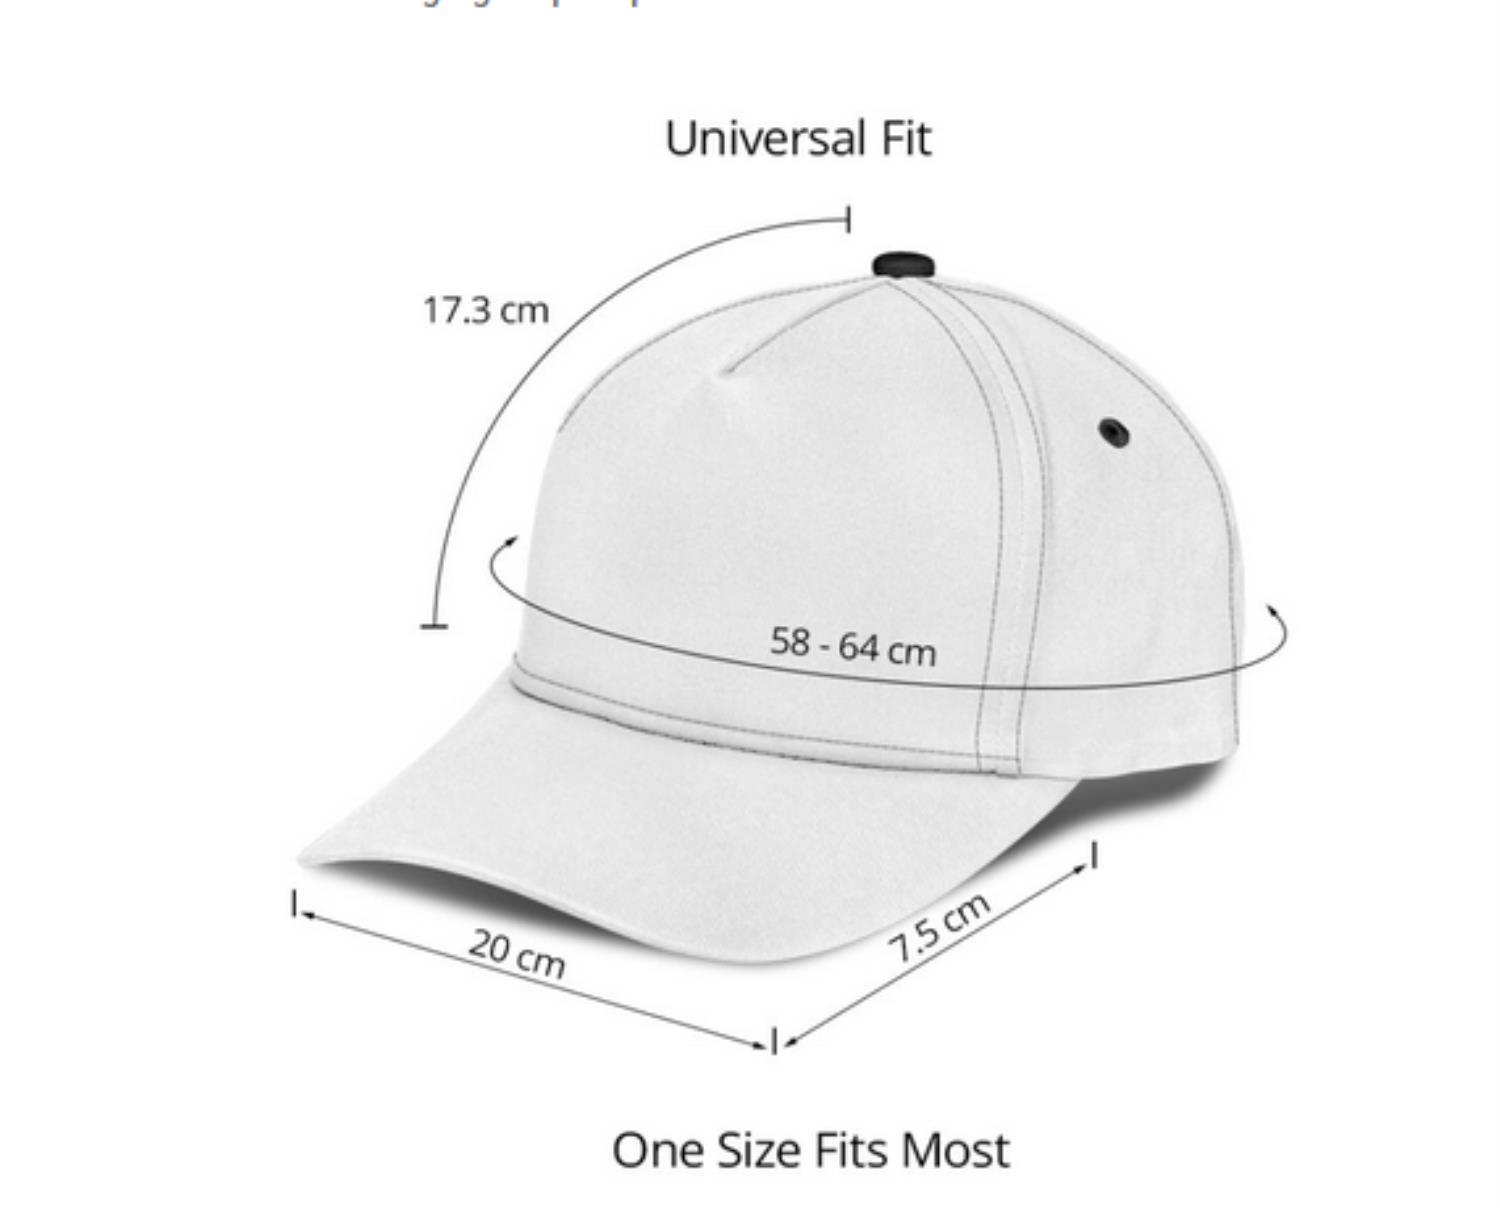 Classic Cap Size's Product Pictures - Kaishirts.com